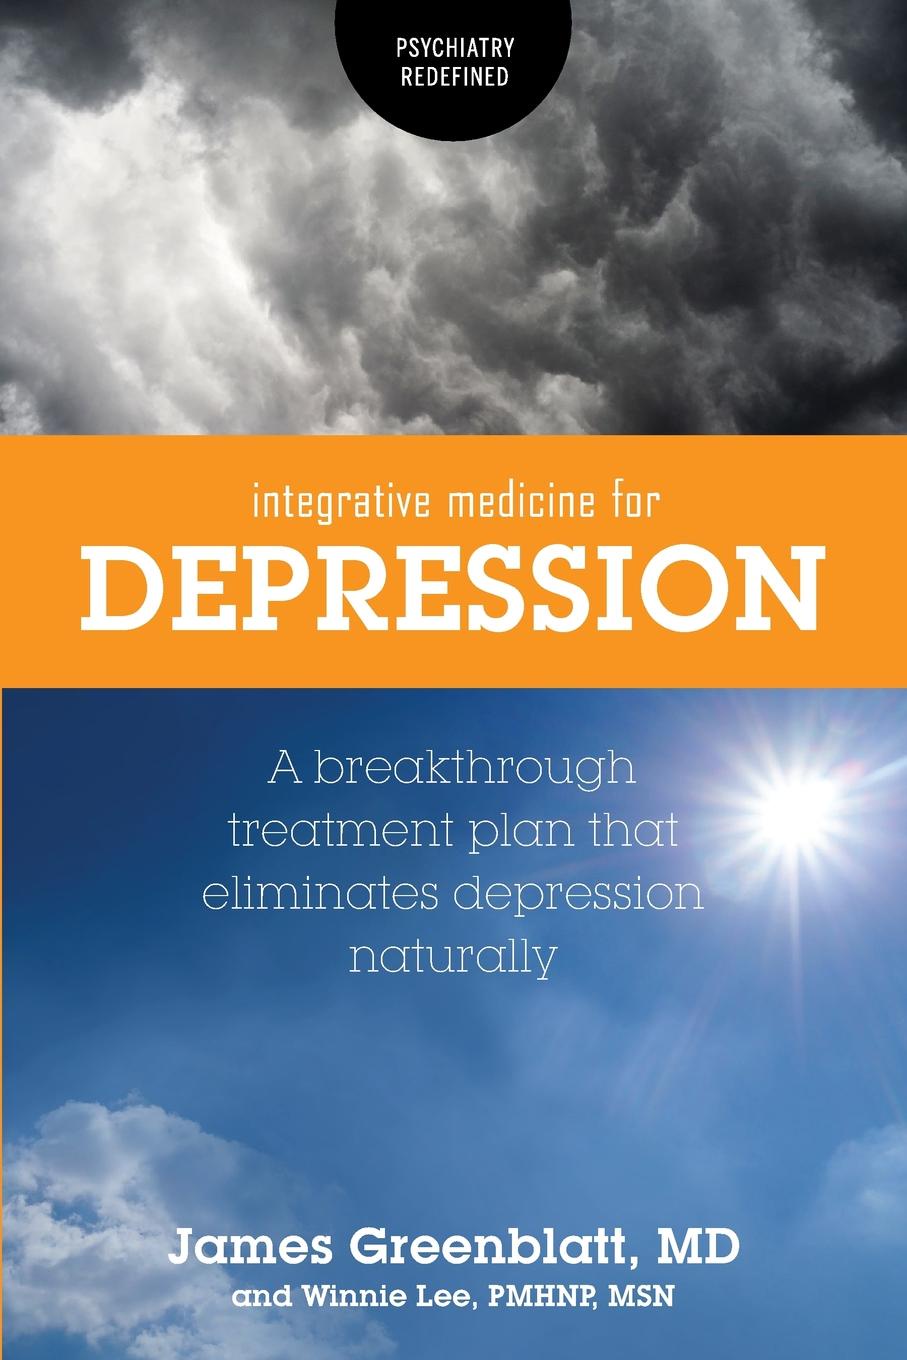 Integrative Medicine for Depression. A Breakthrough Treatment Plan that Eliminates Depression Naturally